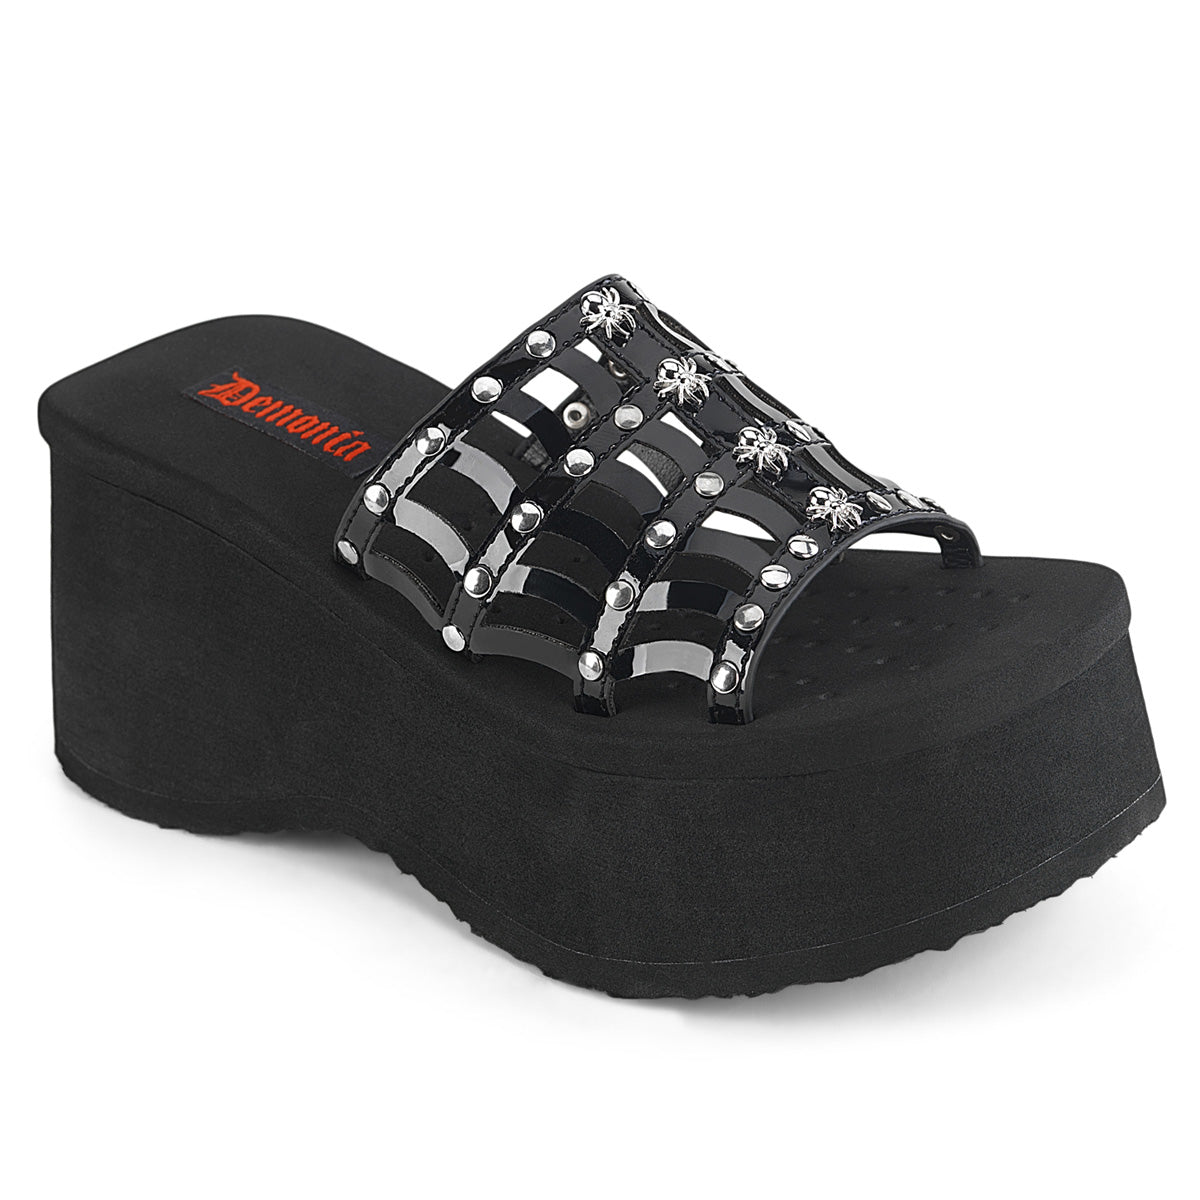 Too Fast | Demonia Funn 13 | Black Patent Leather Women's Sandals